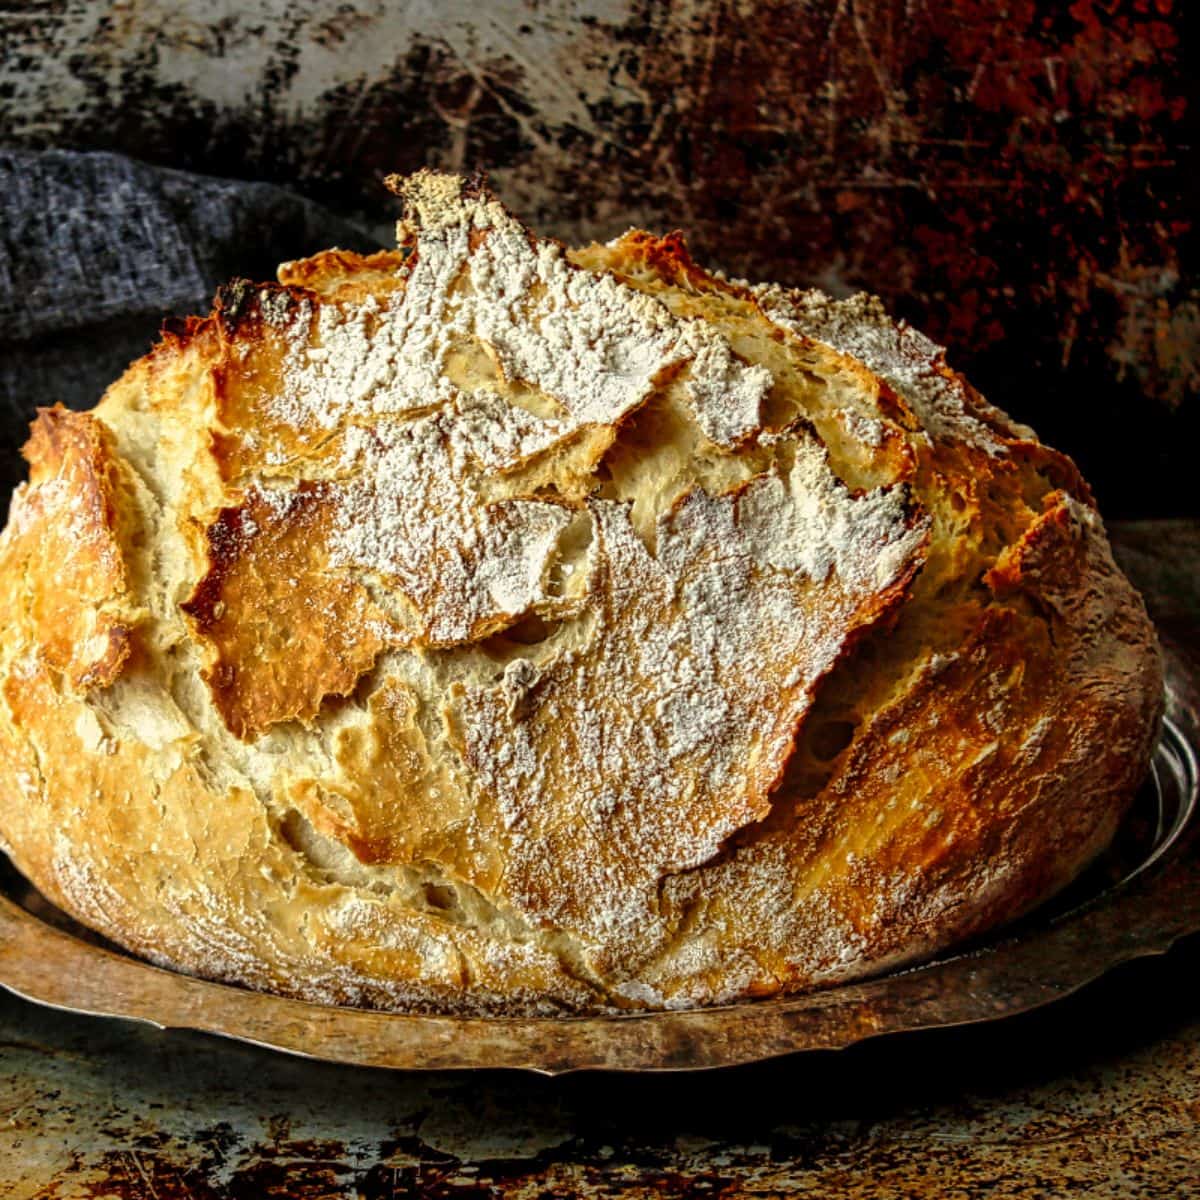 16. Garlic and Herbs Artisan Bread